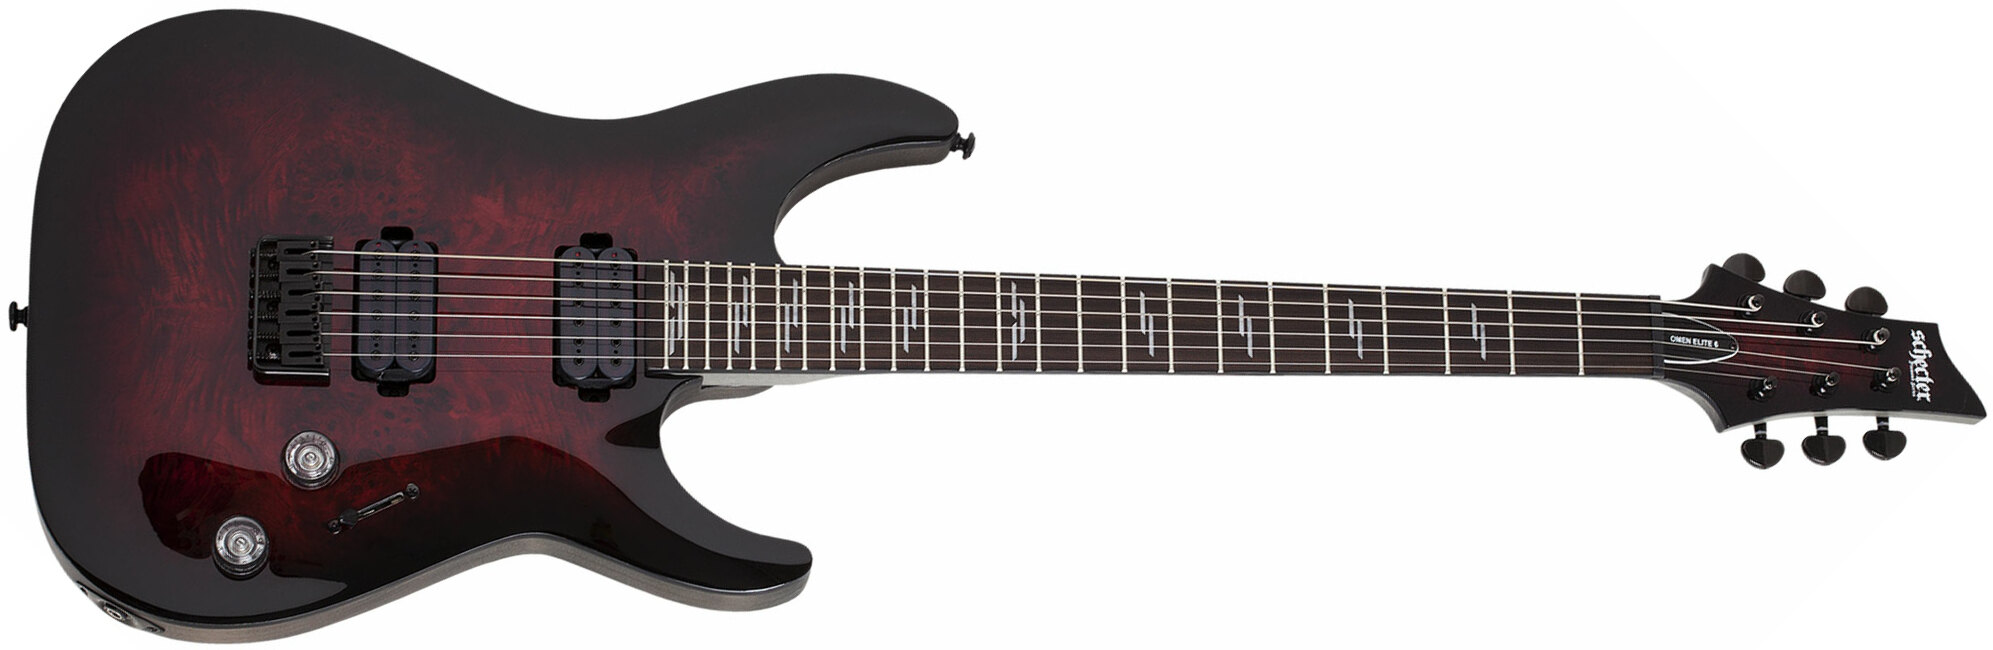 Schecter Omen Elite-6 2h Ht Rw - Black Cherry Burst - Str shape electric guitar - Main picture